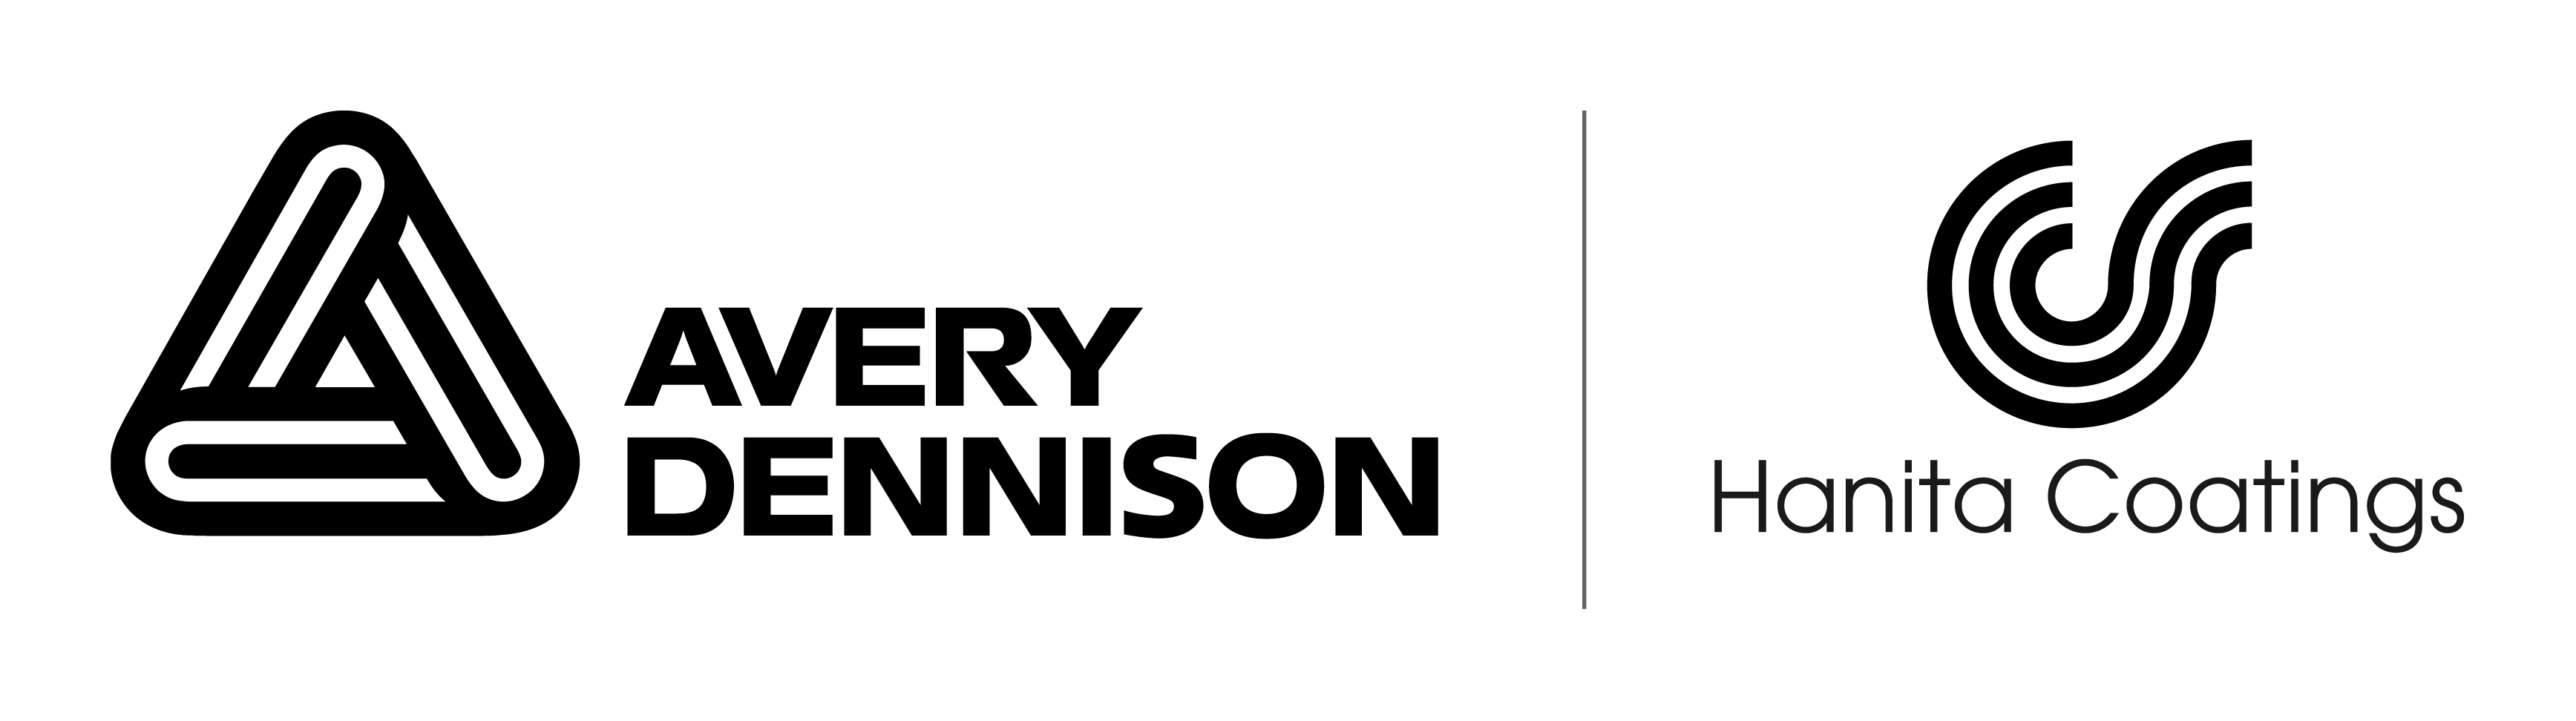 Avery Dennison Logo - Home | Avery Dennison | Hanita